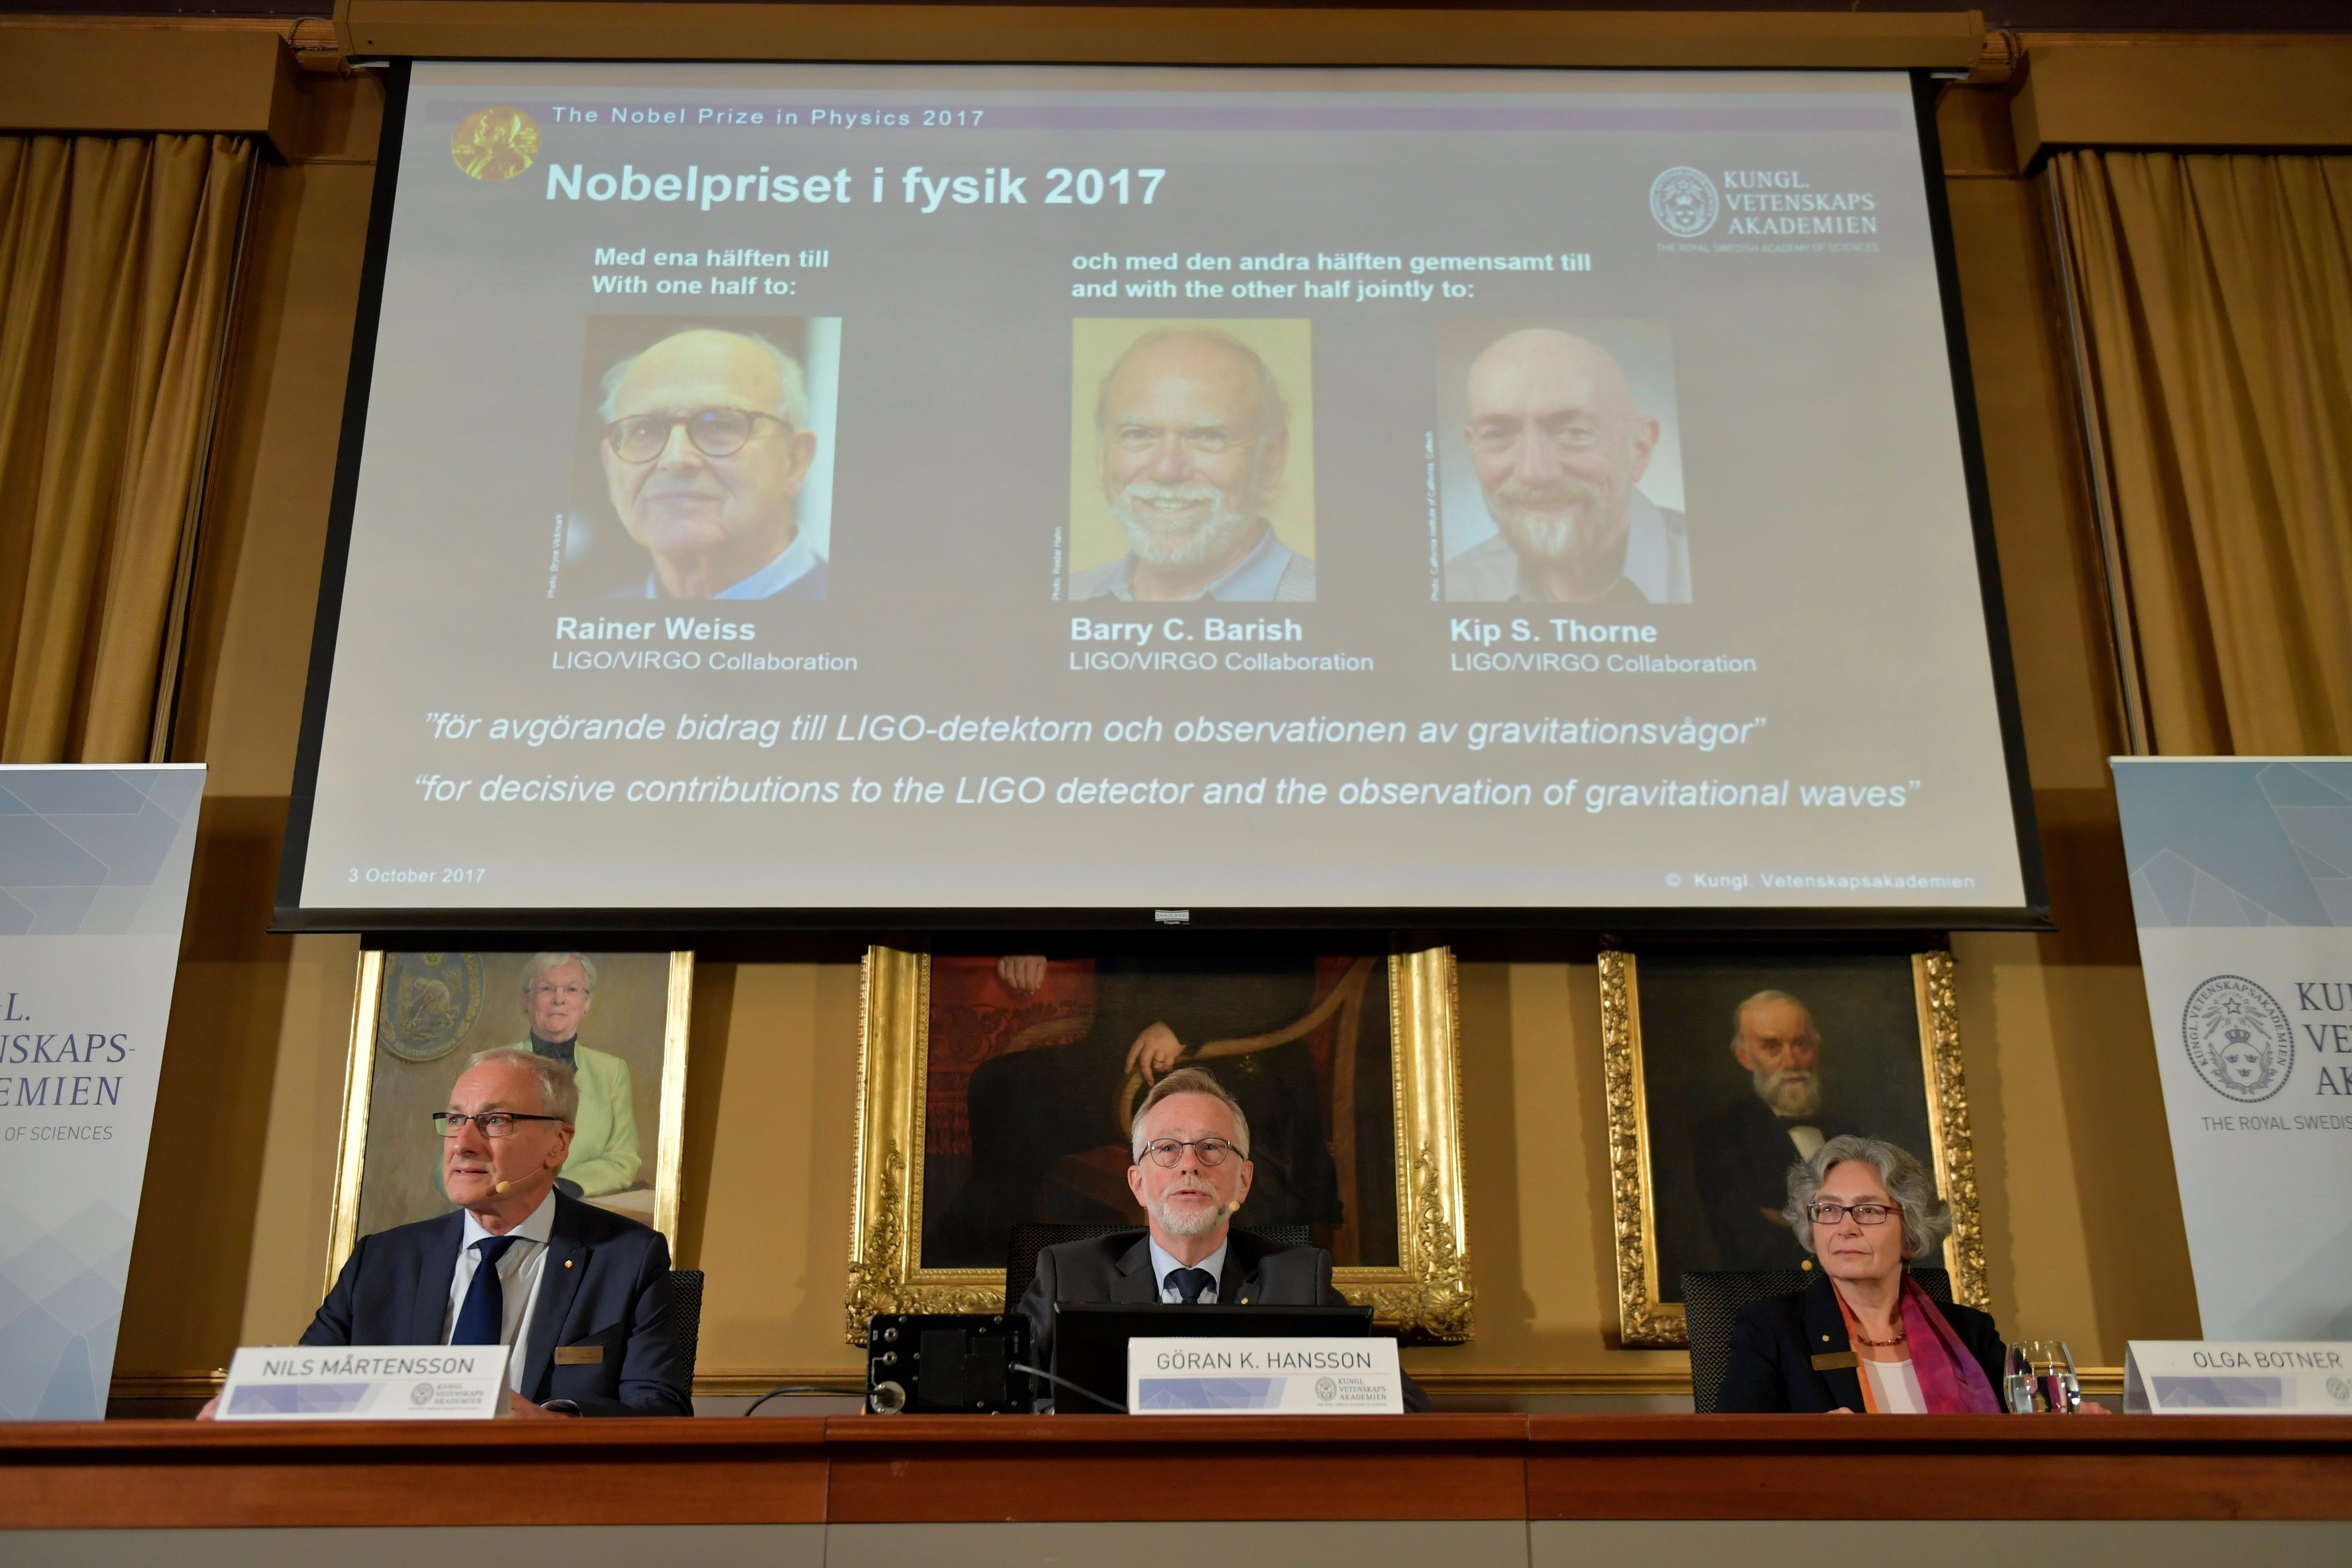  Nobel de Física premia a tres científicos por detectar ondas gravitacionales